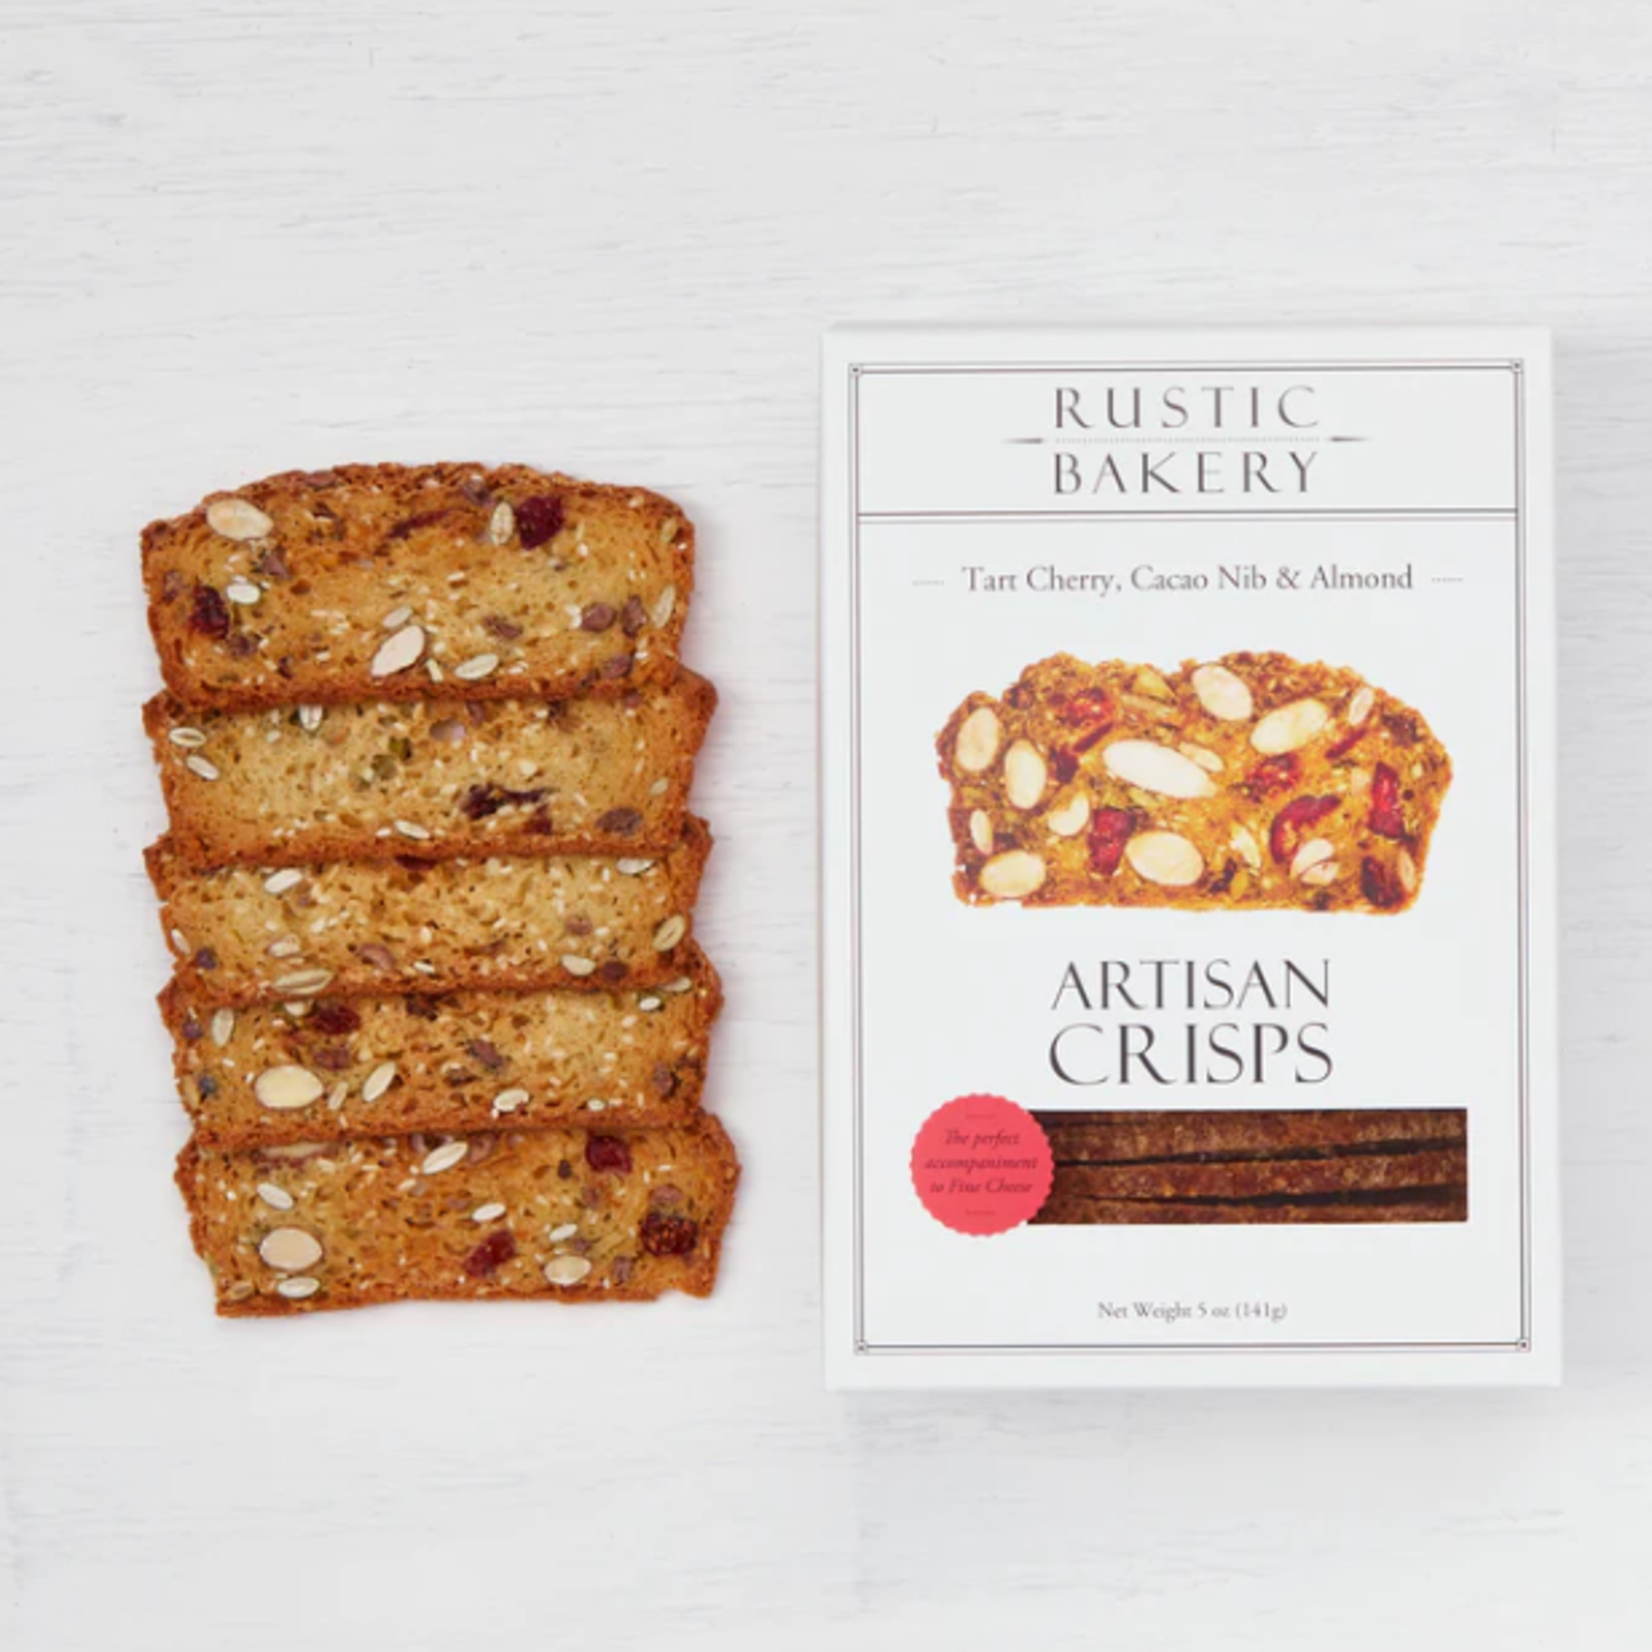 Rustic  Bakery Rustic Bakery Crisps - Tart Cherry, Cacao Nib & Almond 5 oz